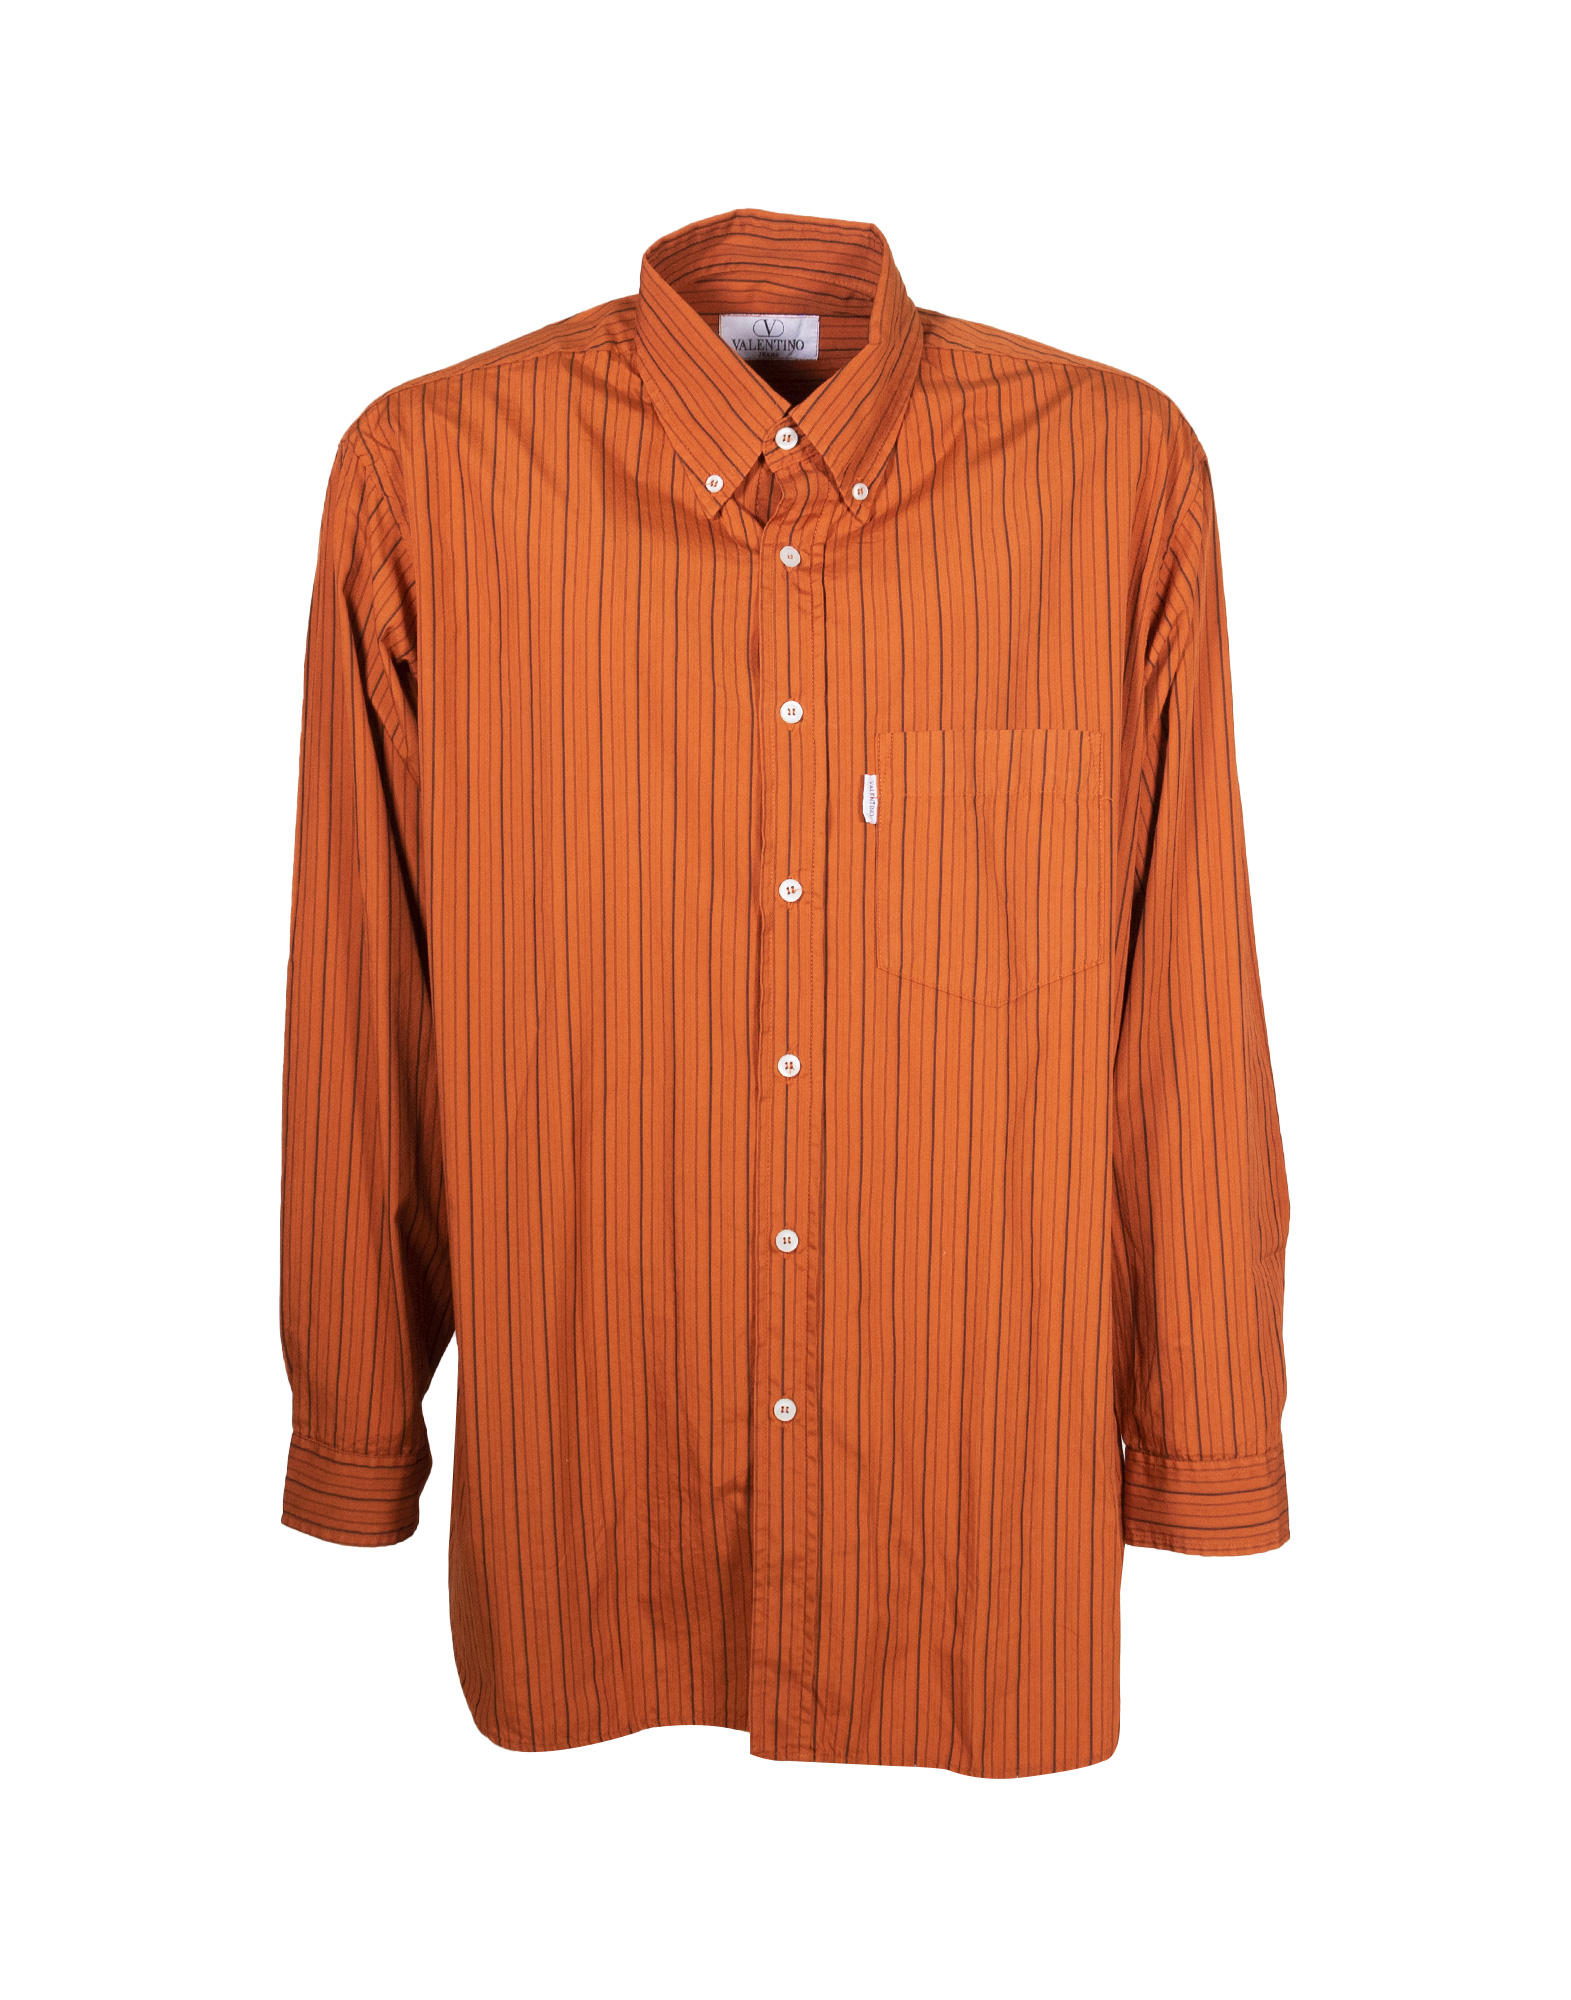 Valentino Jeans - Striped orange shirt